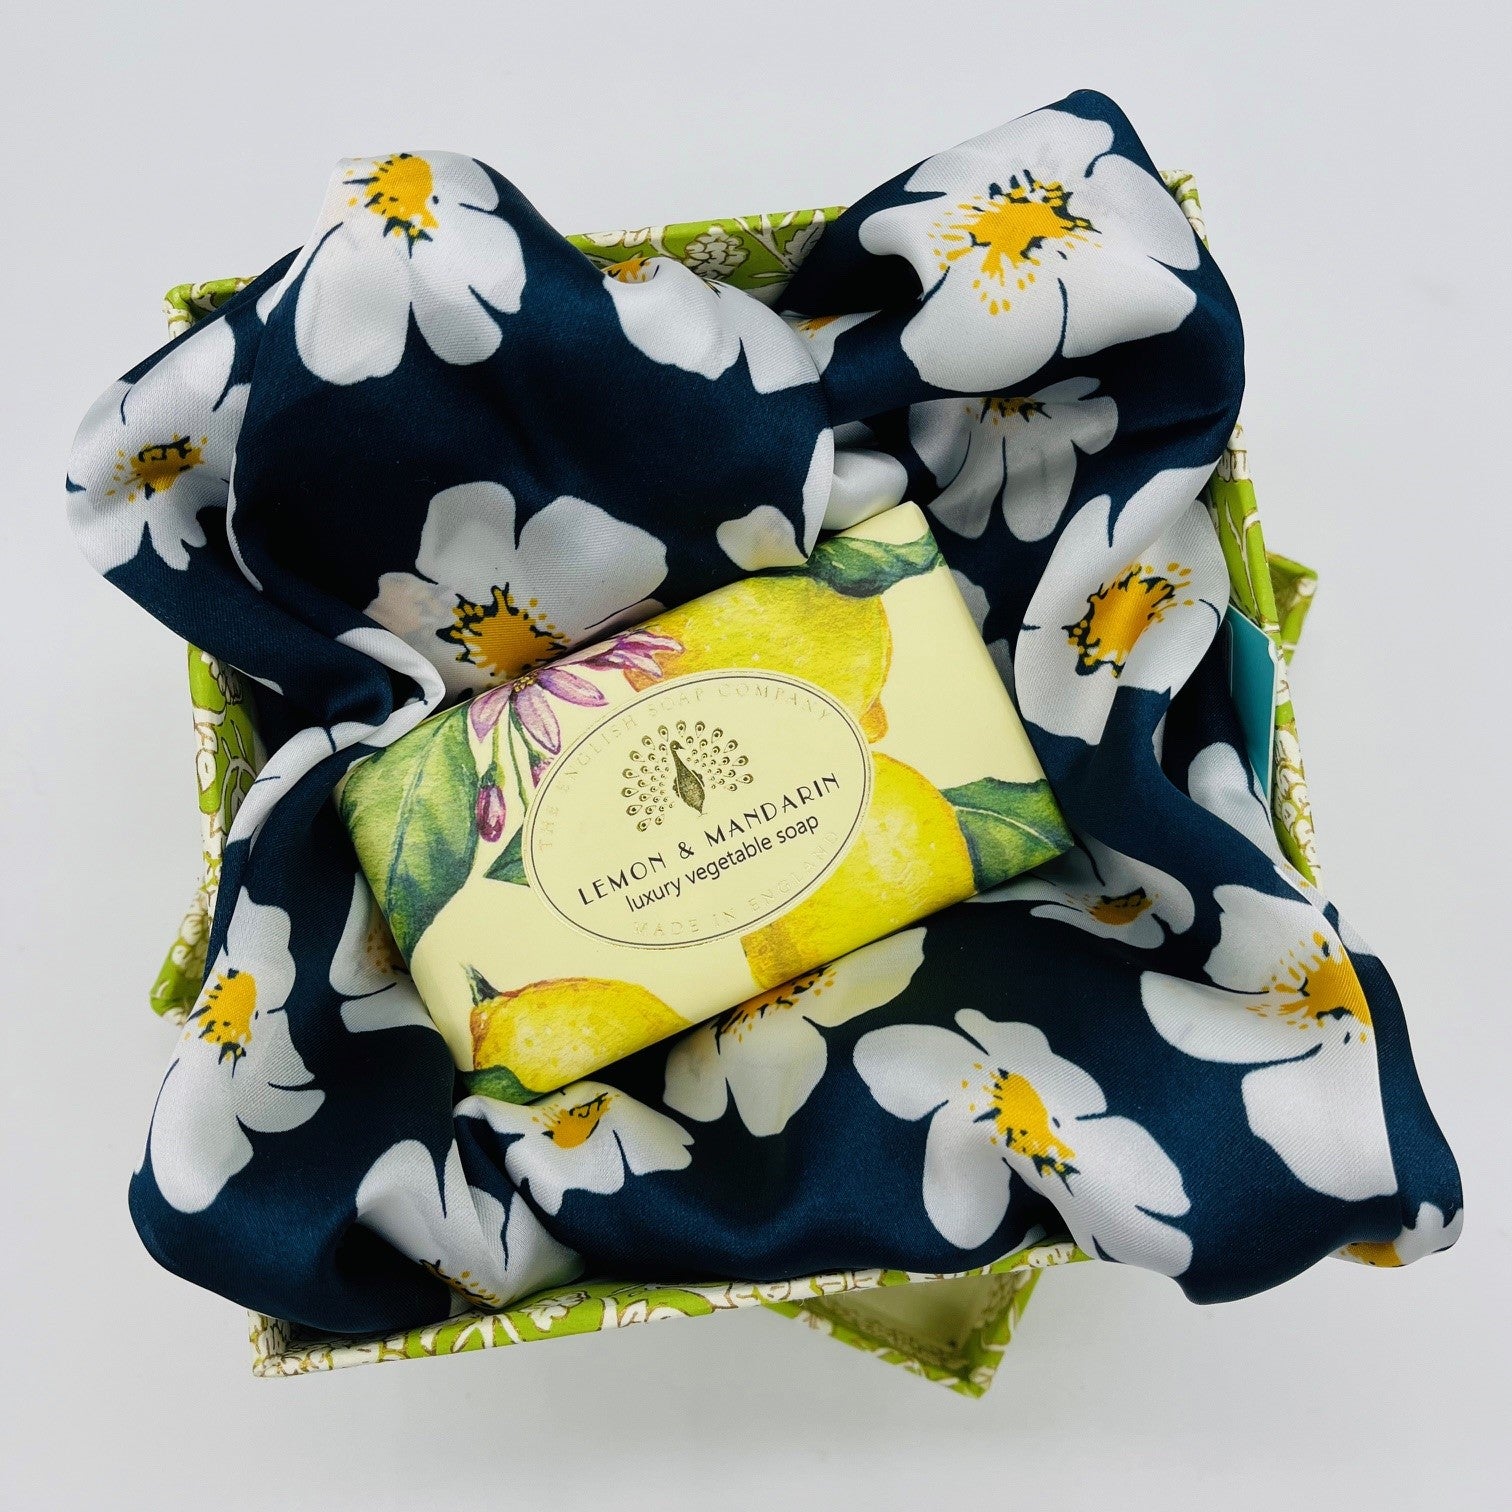 'Lemon Pansies' Mother's Day Gift Box